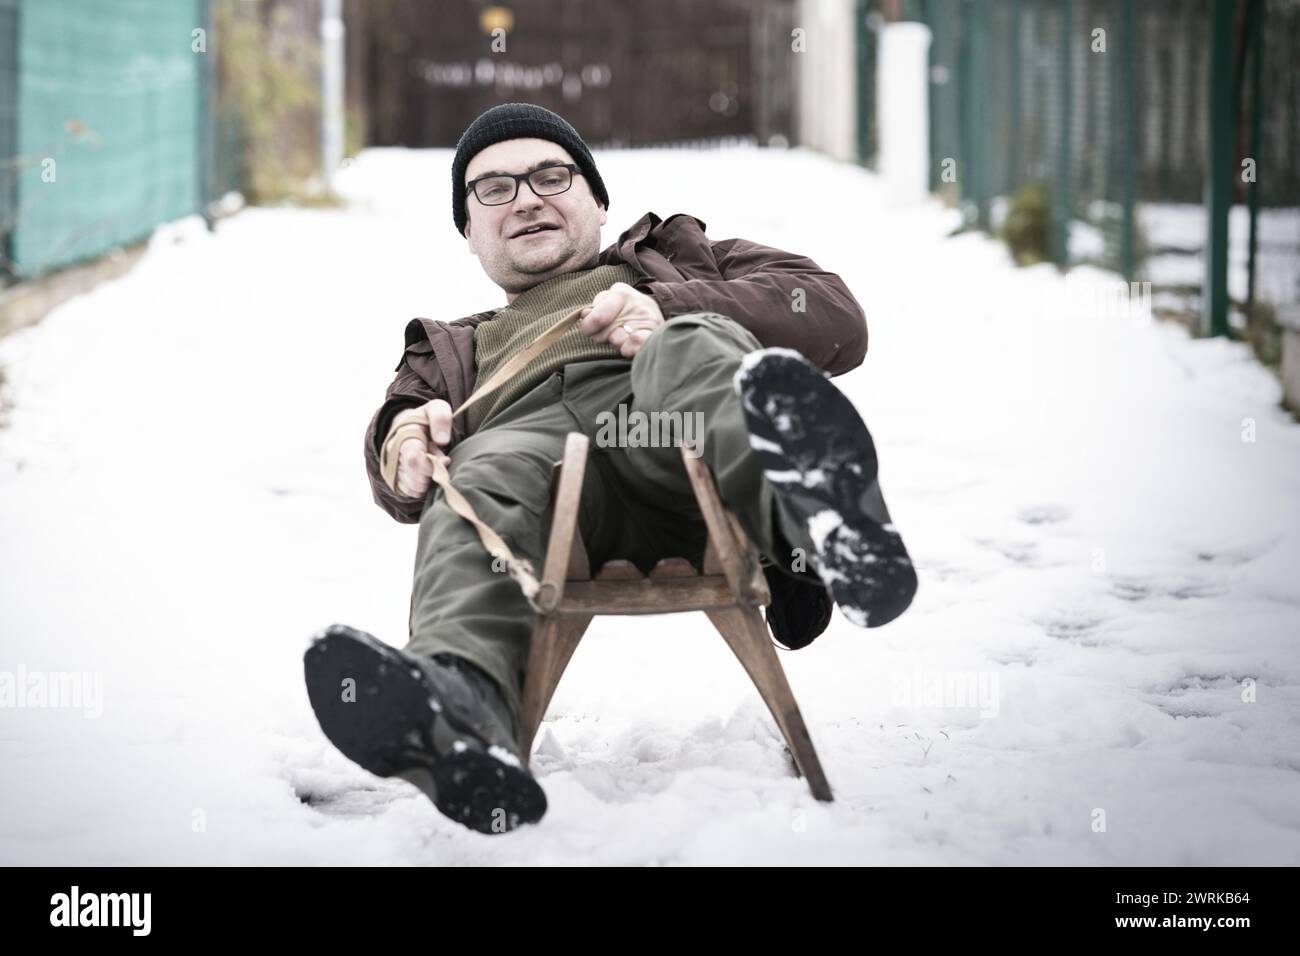 Adult man enjoying winter with classic retro wooden toboggan Stock Photo